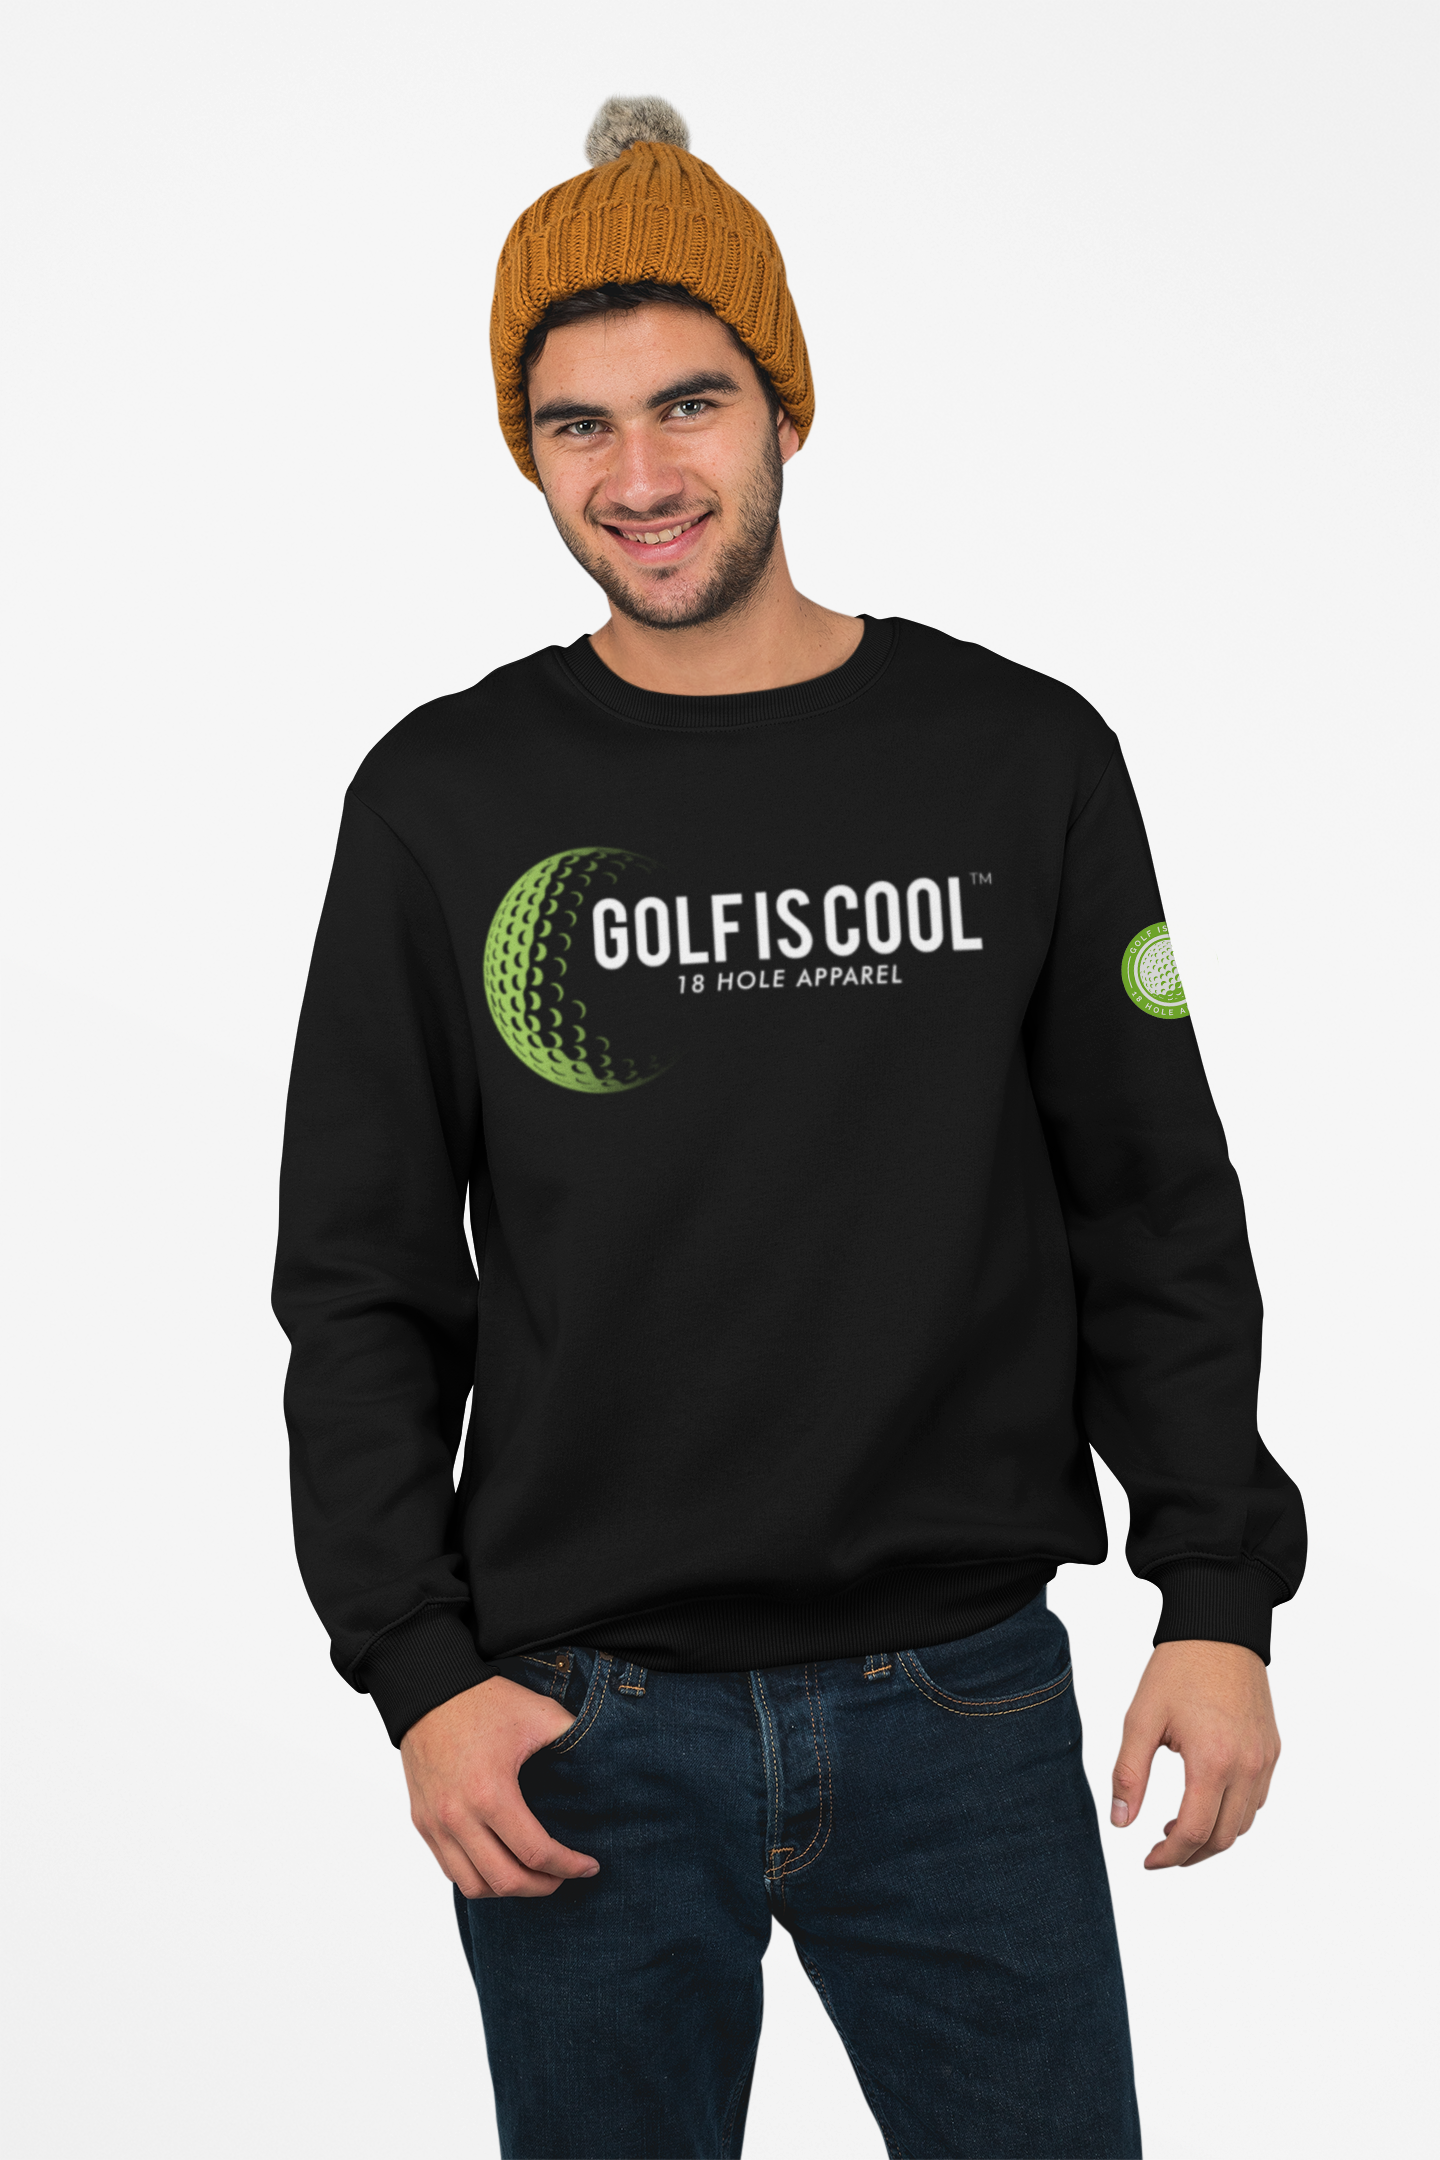 Golf is Cool Apparel - Crewneck Black